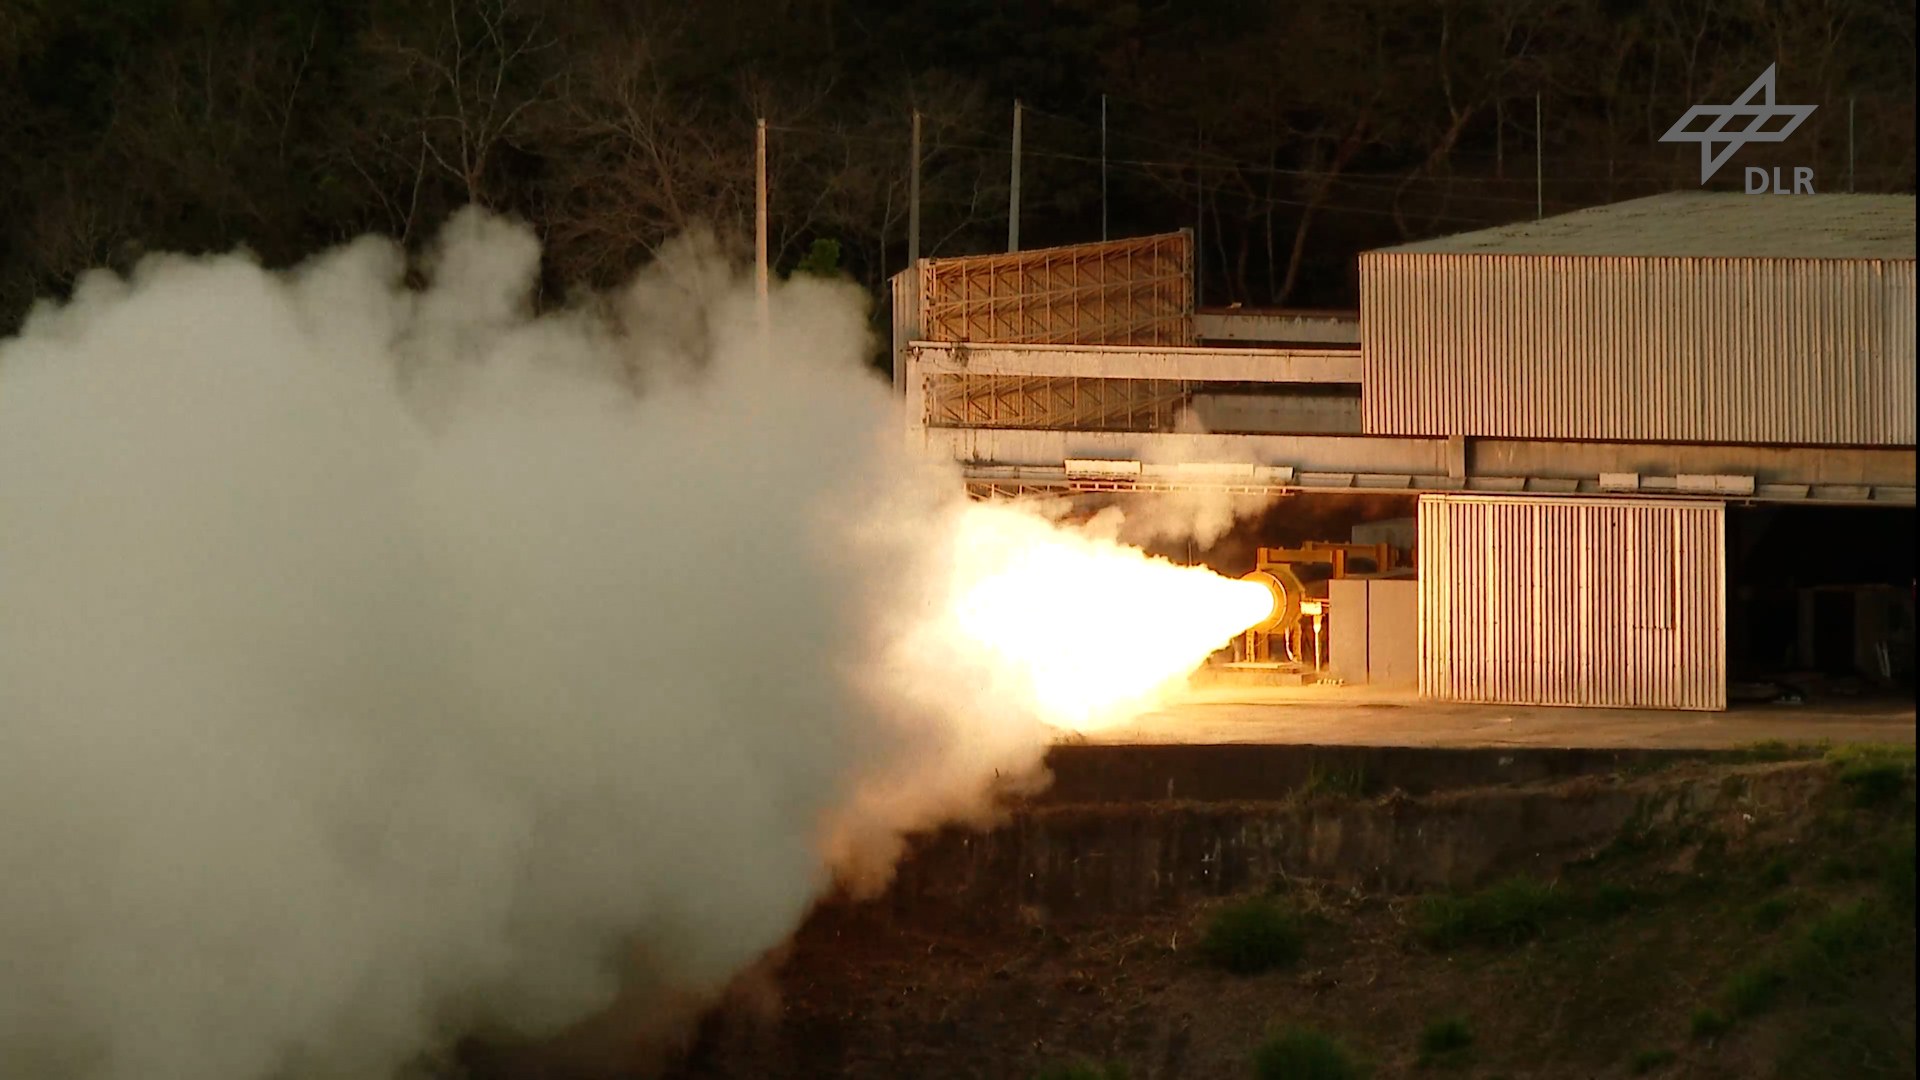 Video still: S50 solid rocket motor during the static burn test in Brazil